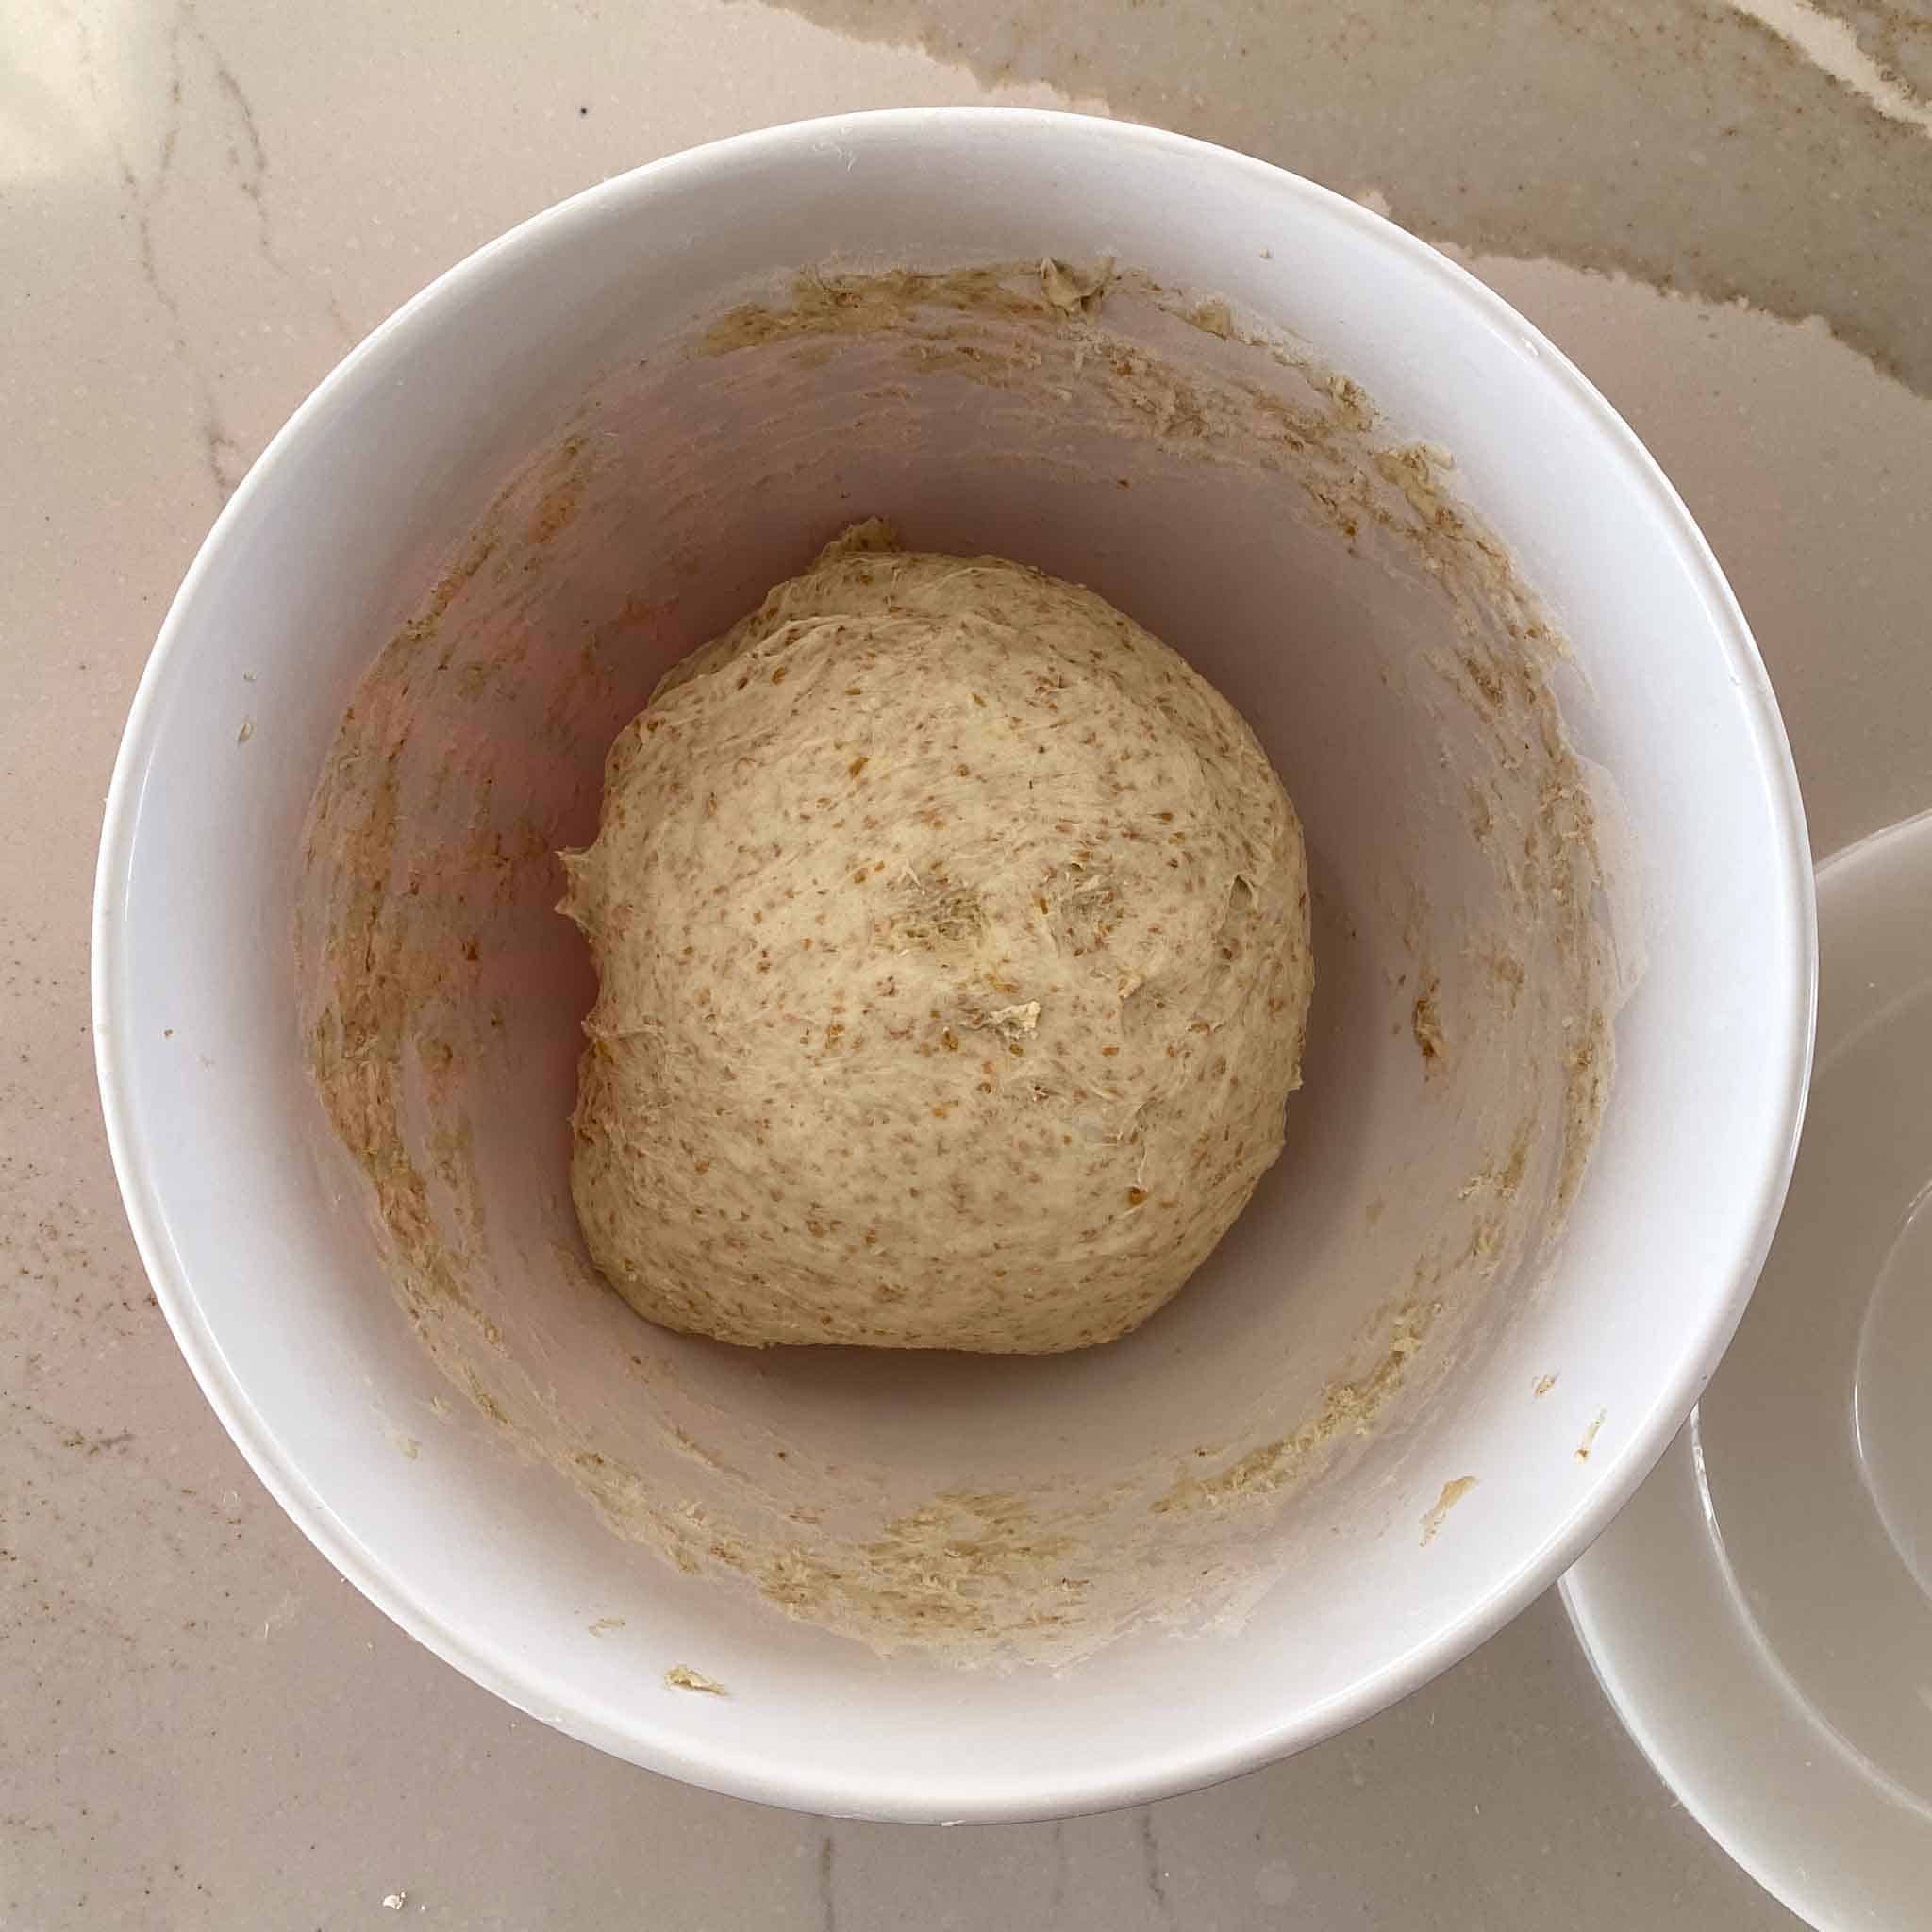 Sourdough dough resting in a bowl.